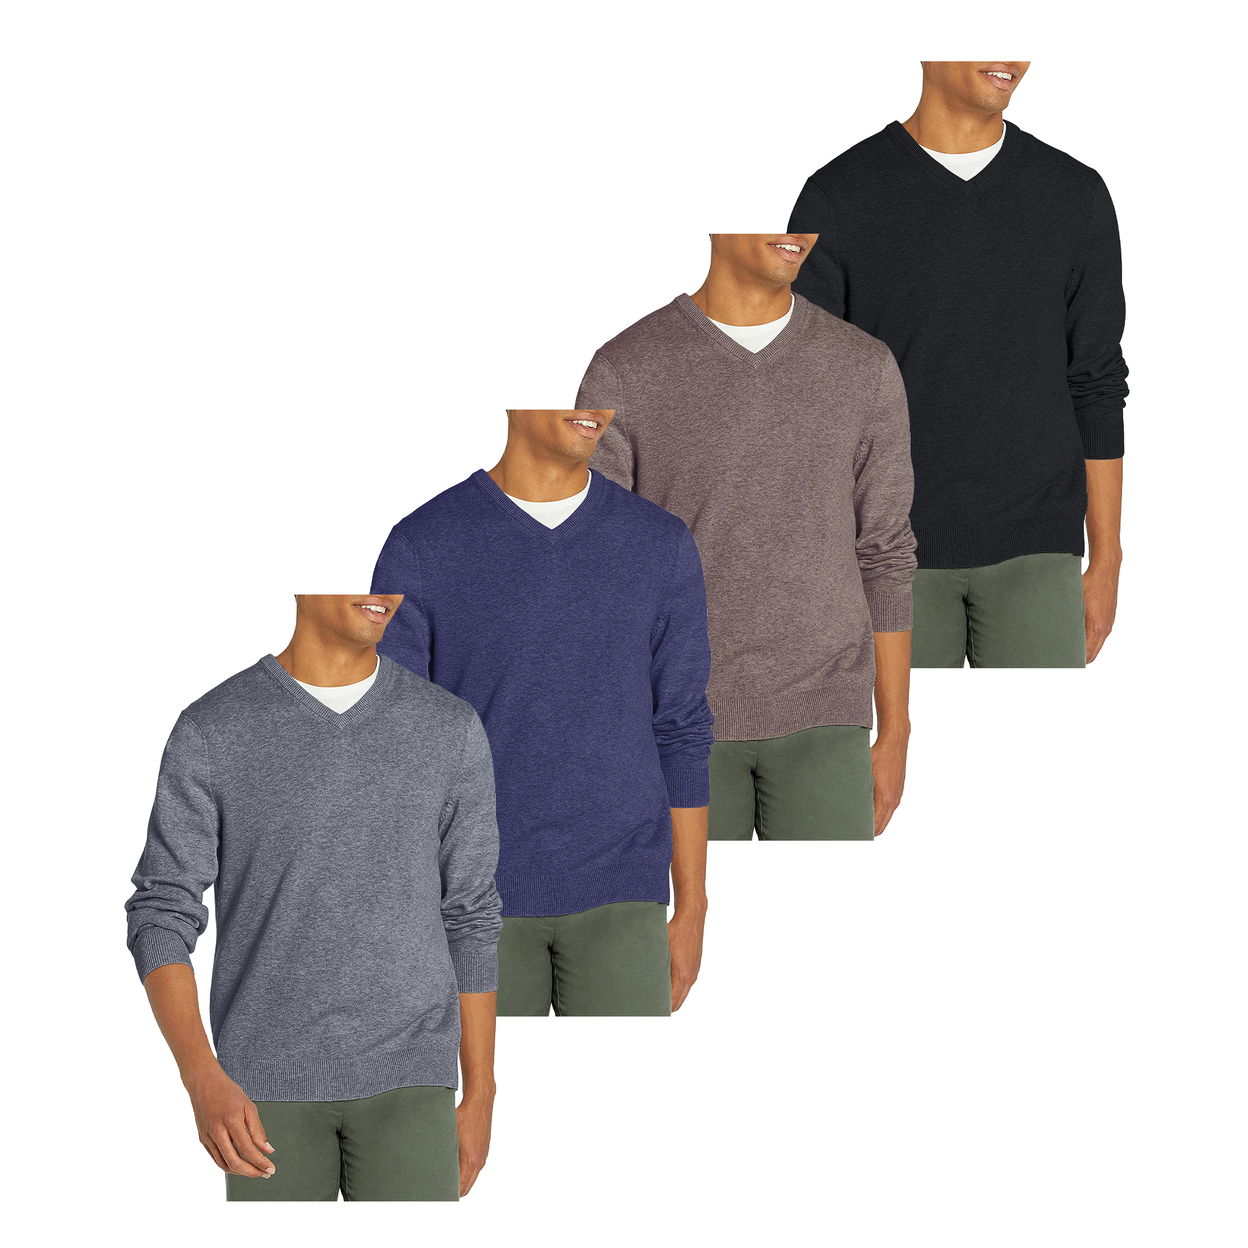 2-Pack: Men's Casual Ultra Soft Slim Fit Warm Knit V-Neck Sweater - Black & Grey, Large